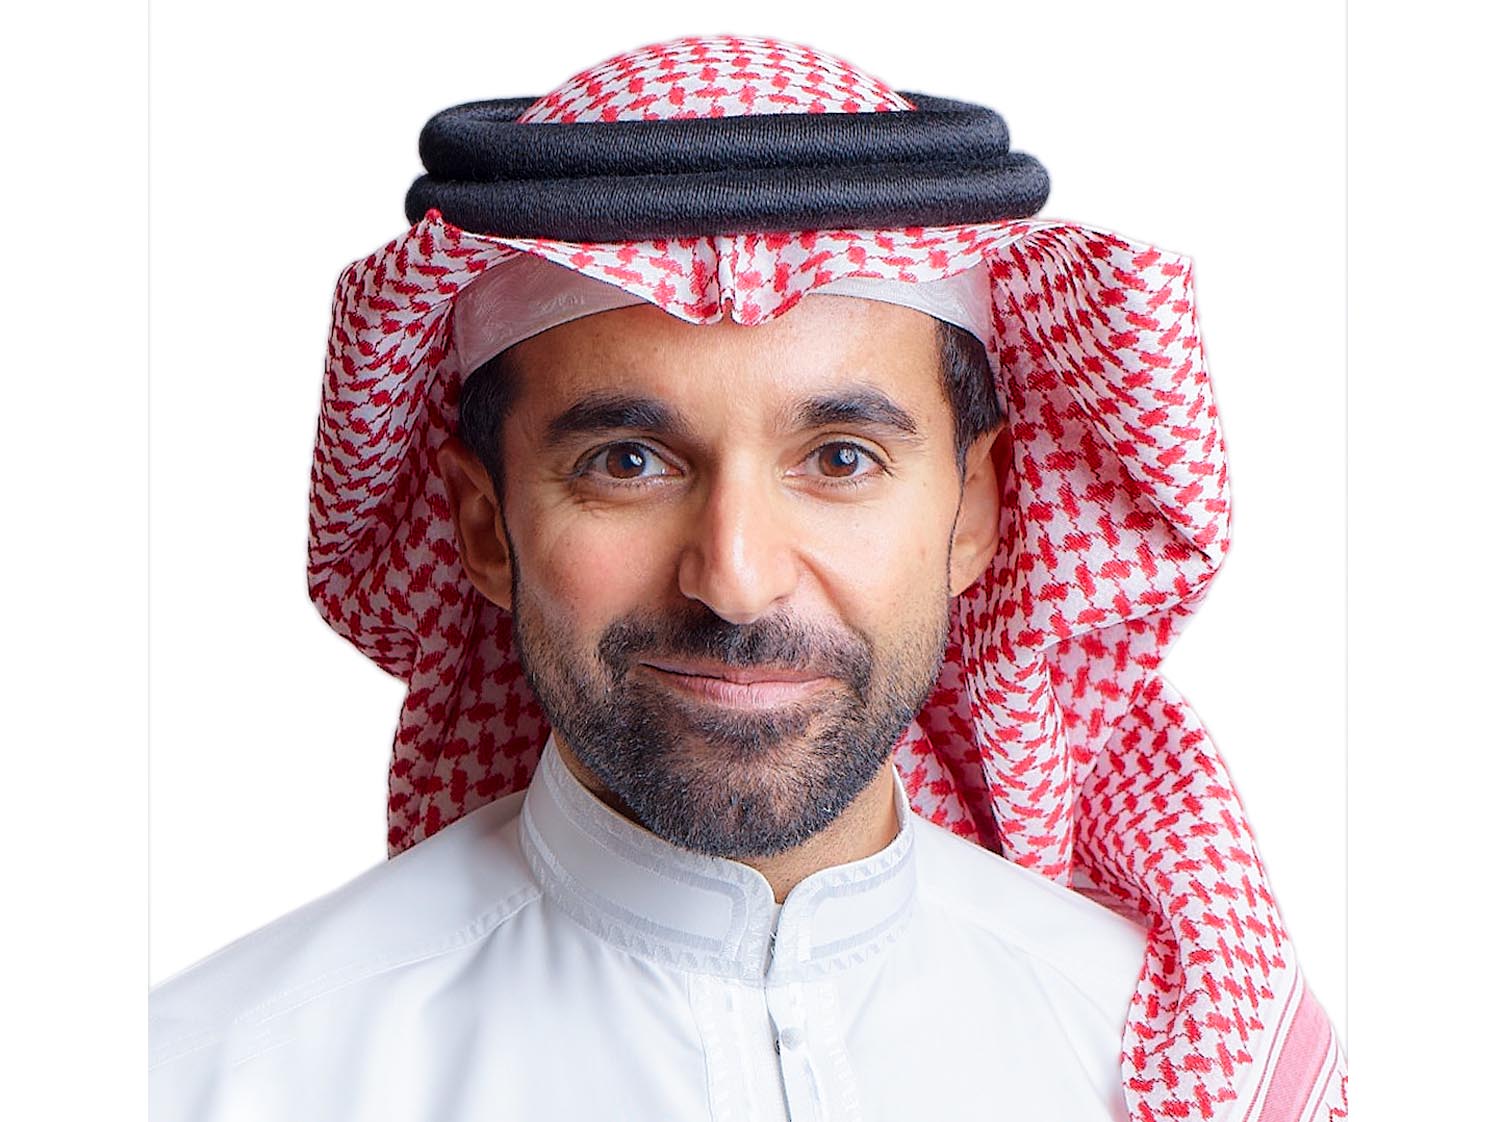 Snap appoints Abdulla Alhammadi as Managing Director in KSA